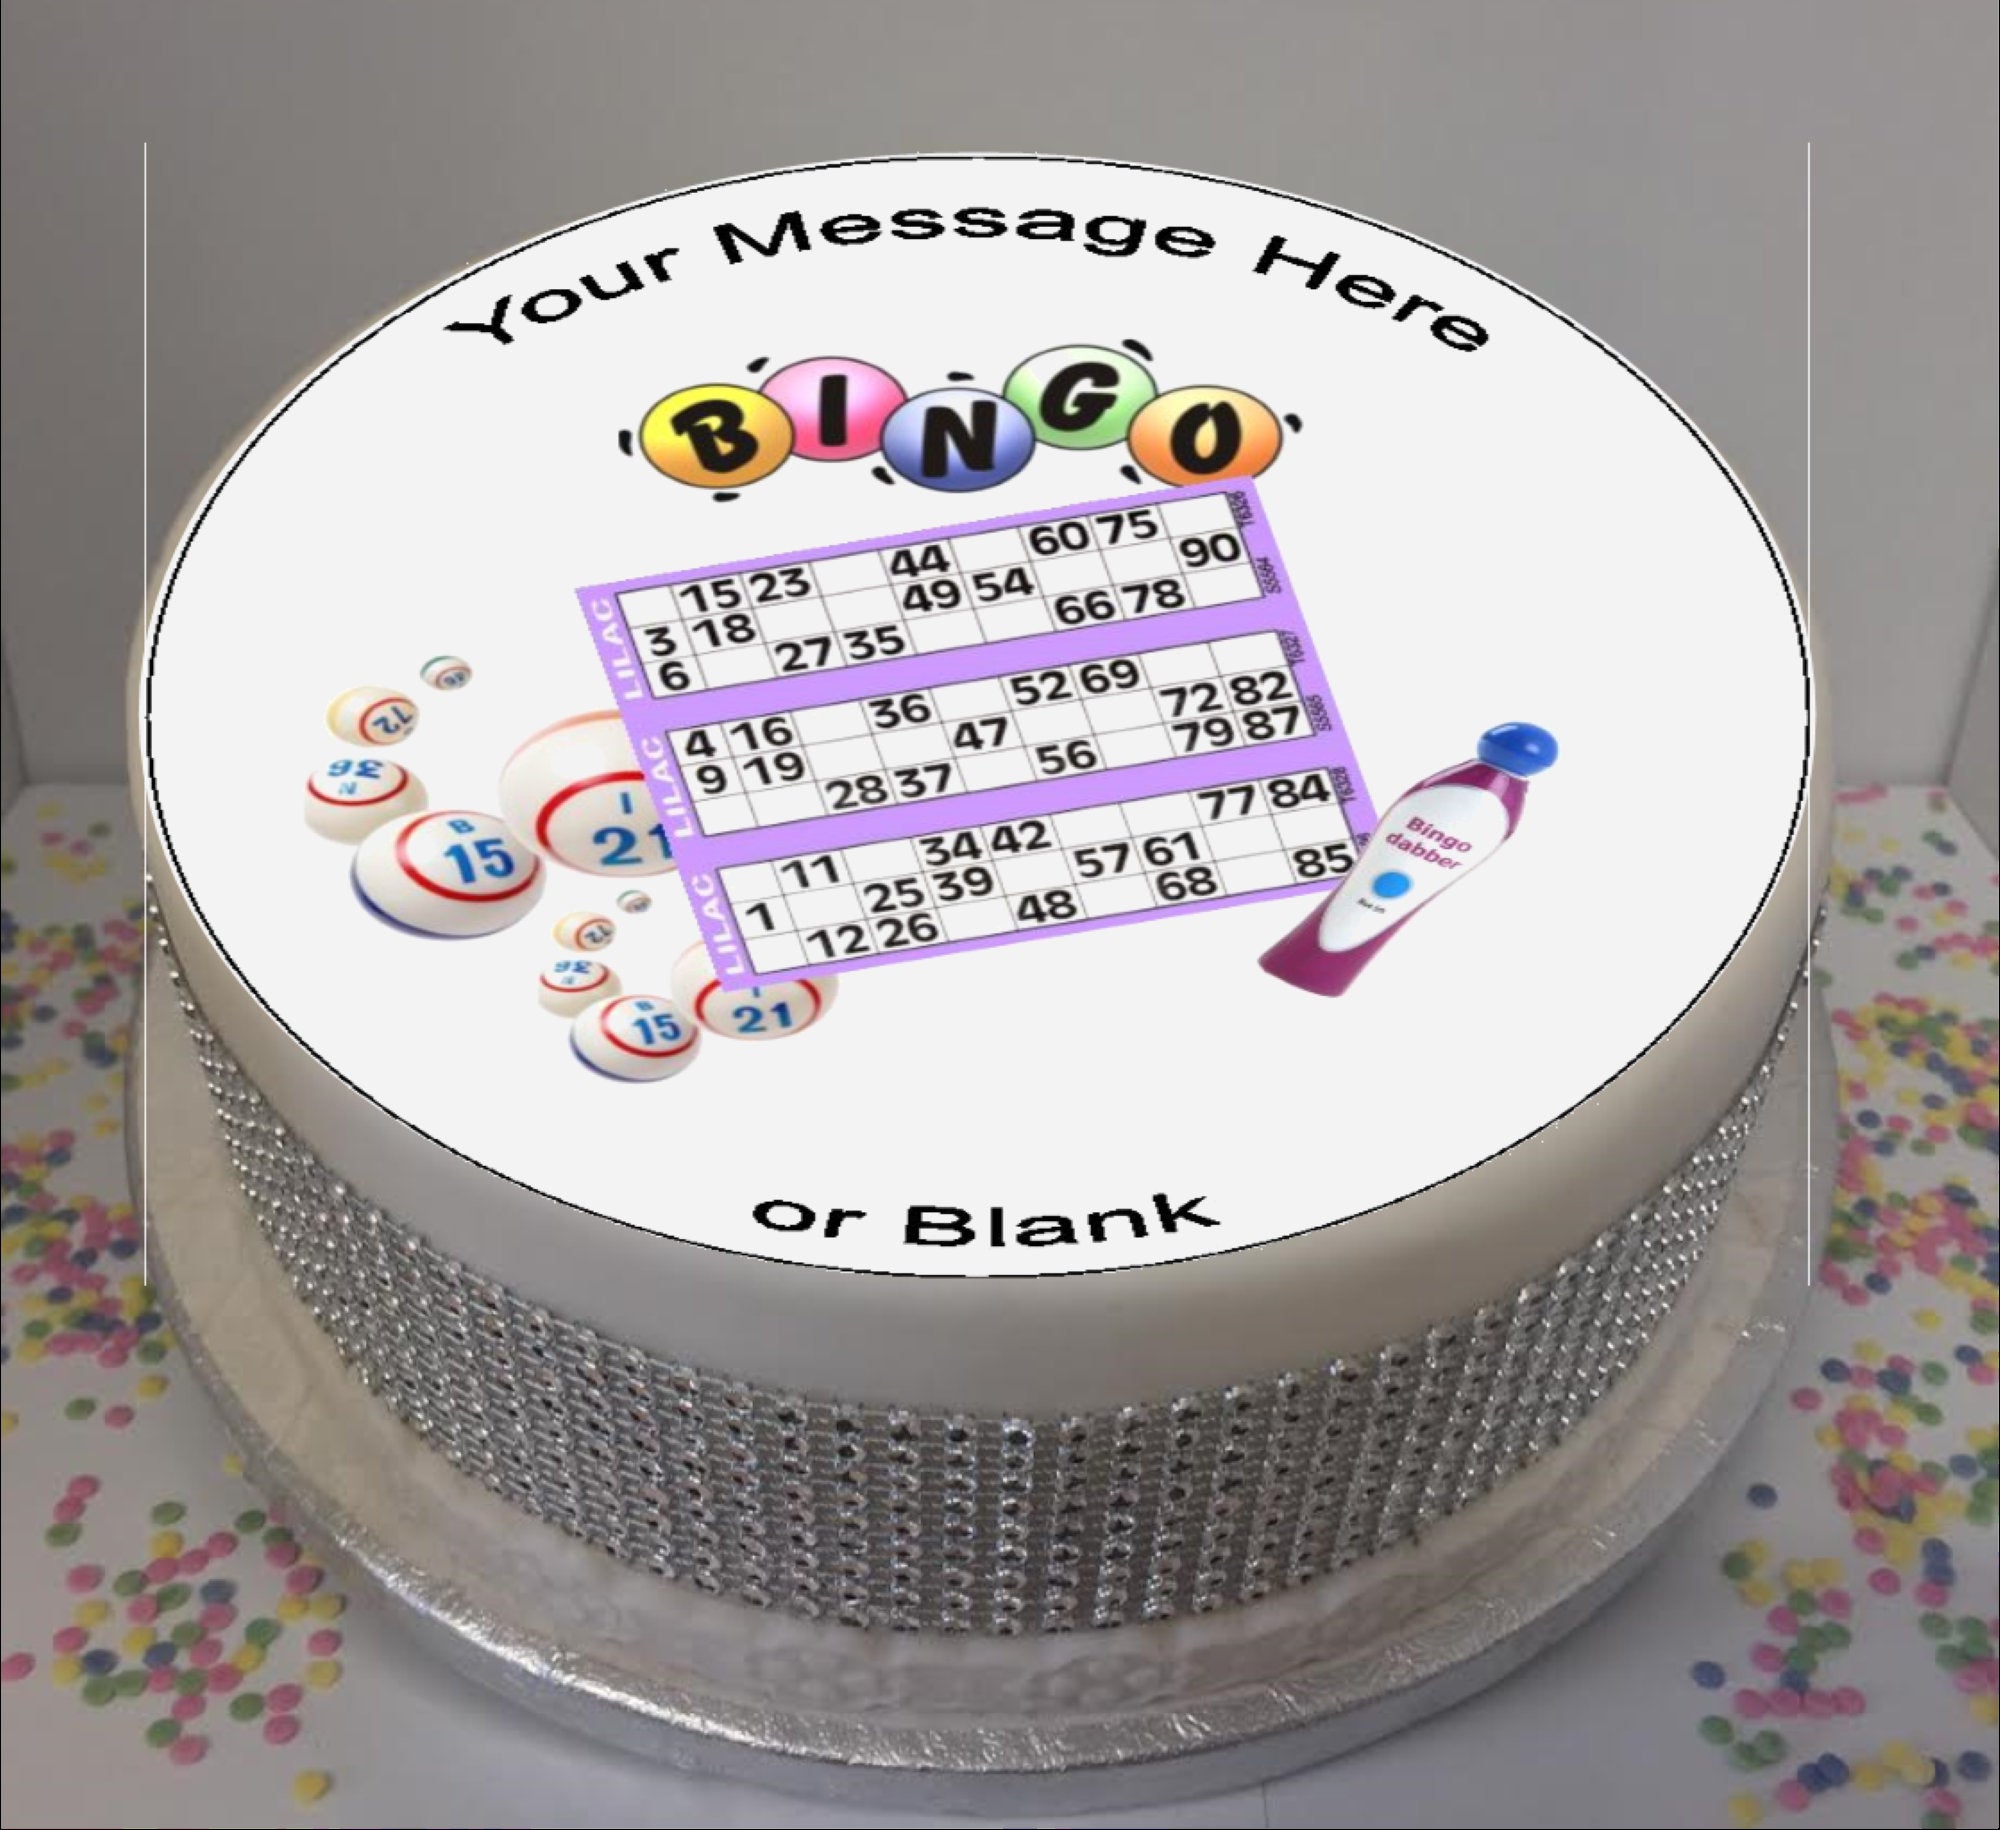 Bingo themed Birthday Cake - Decorated Cake by Caketastic - CakesDecor